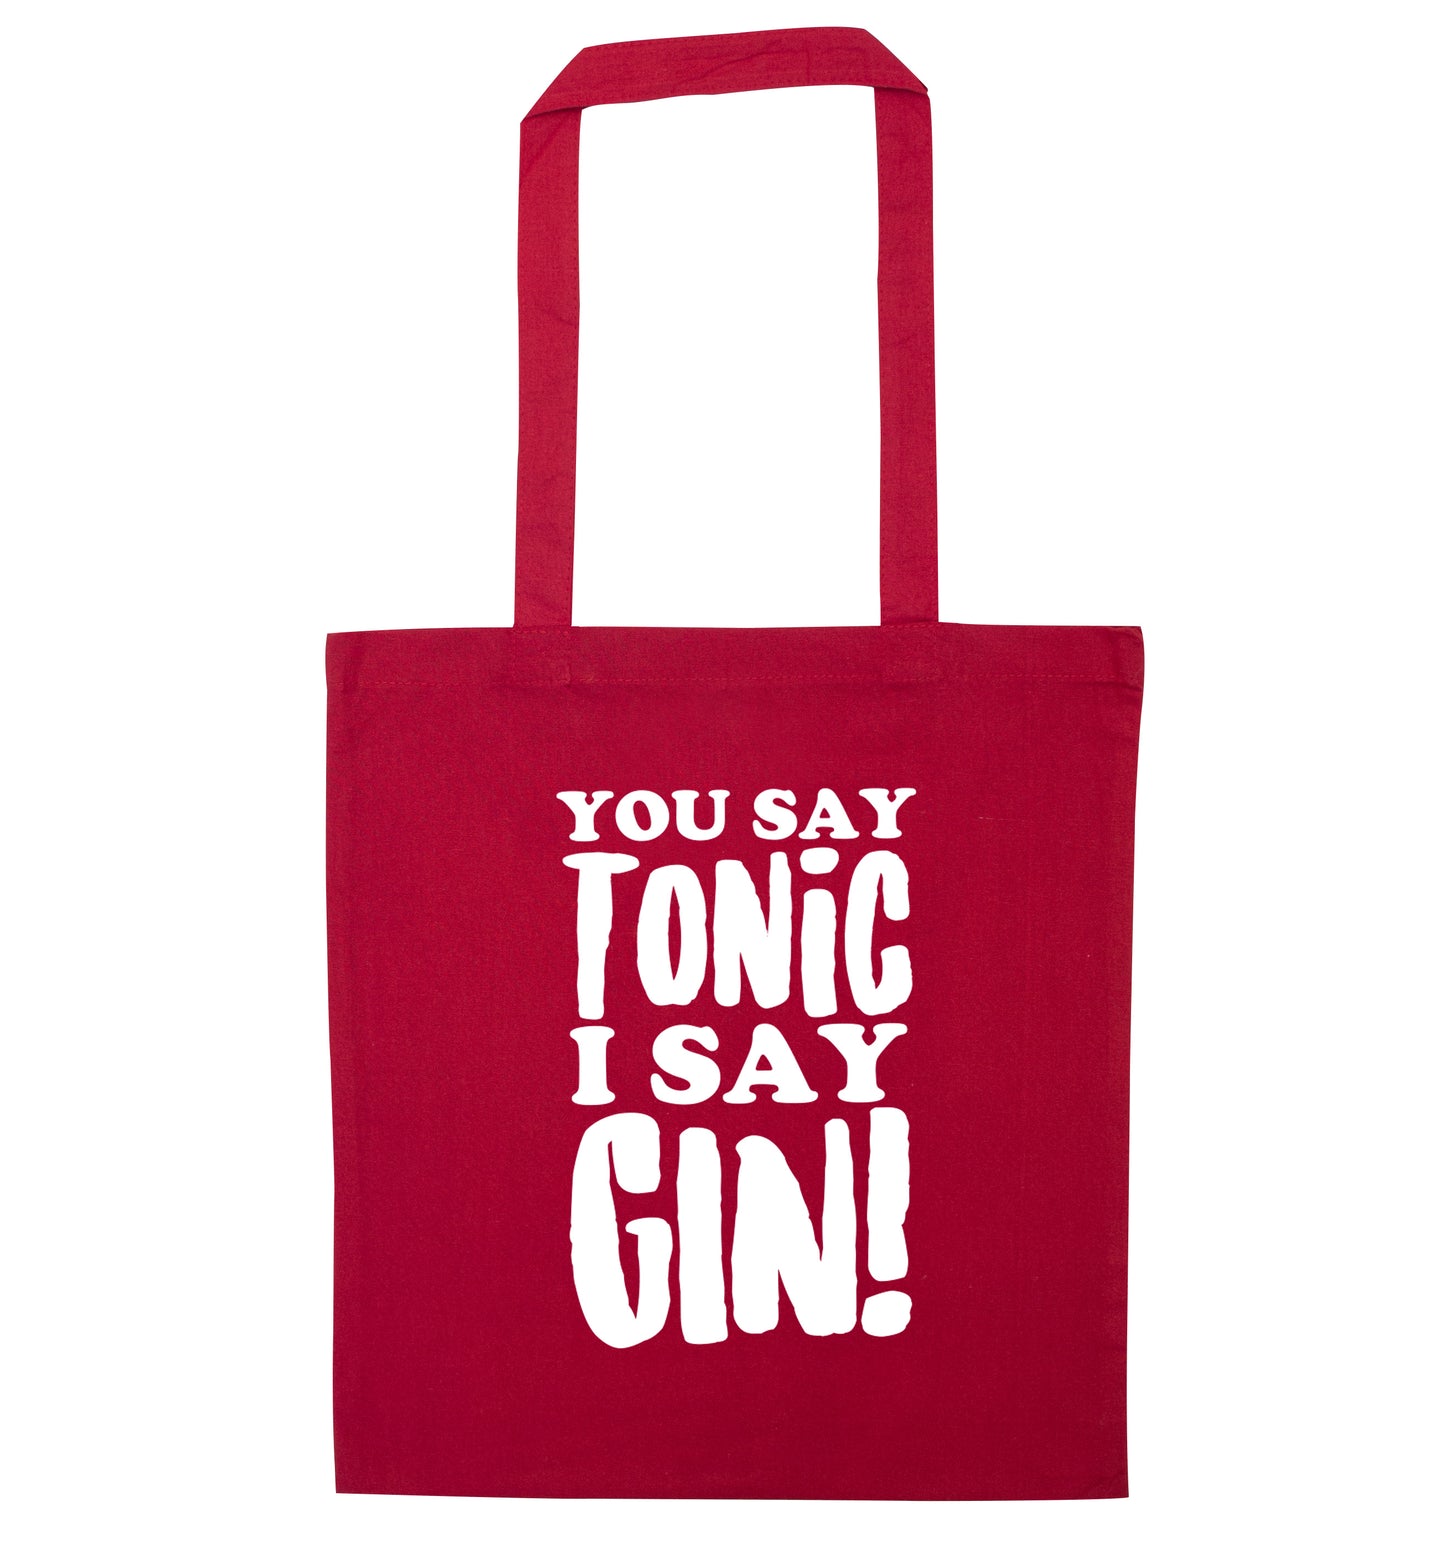 You say tonic I say gin! red tote bag